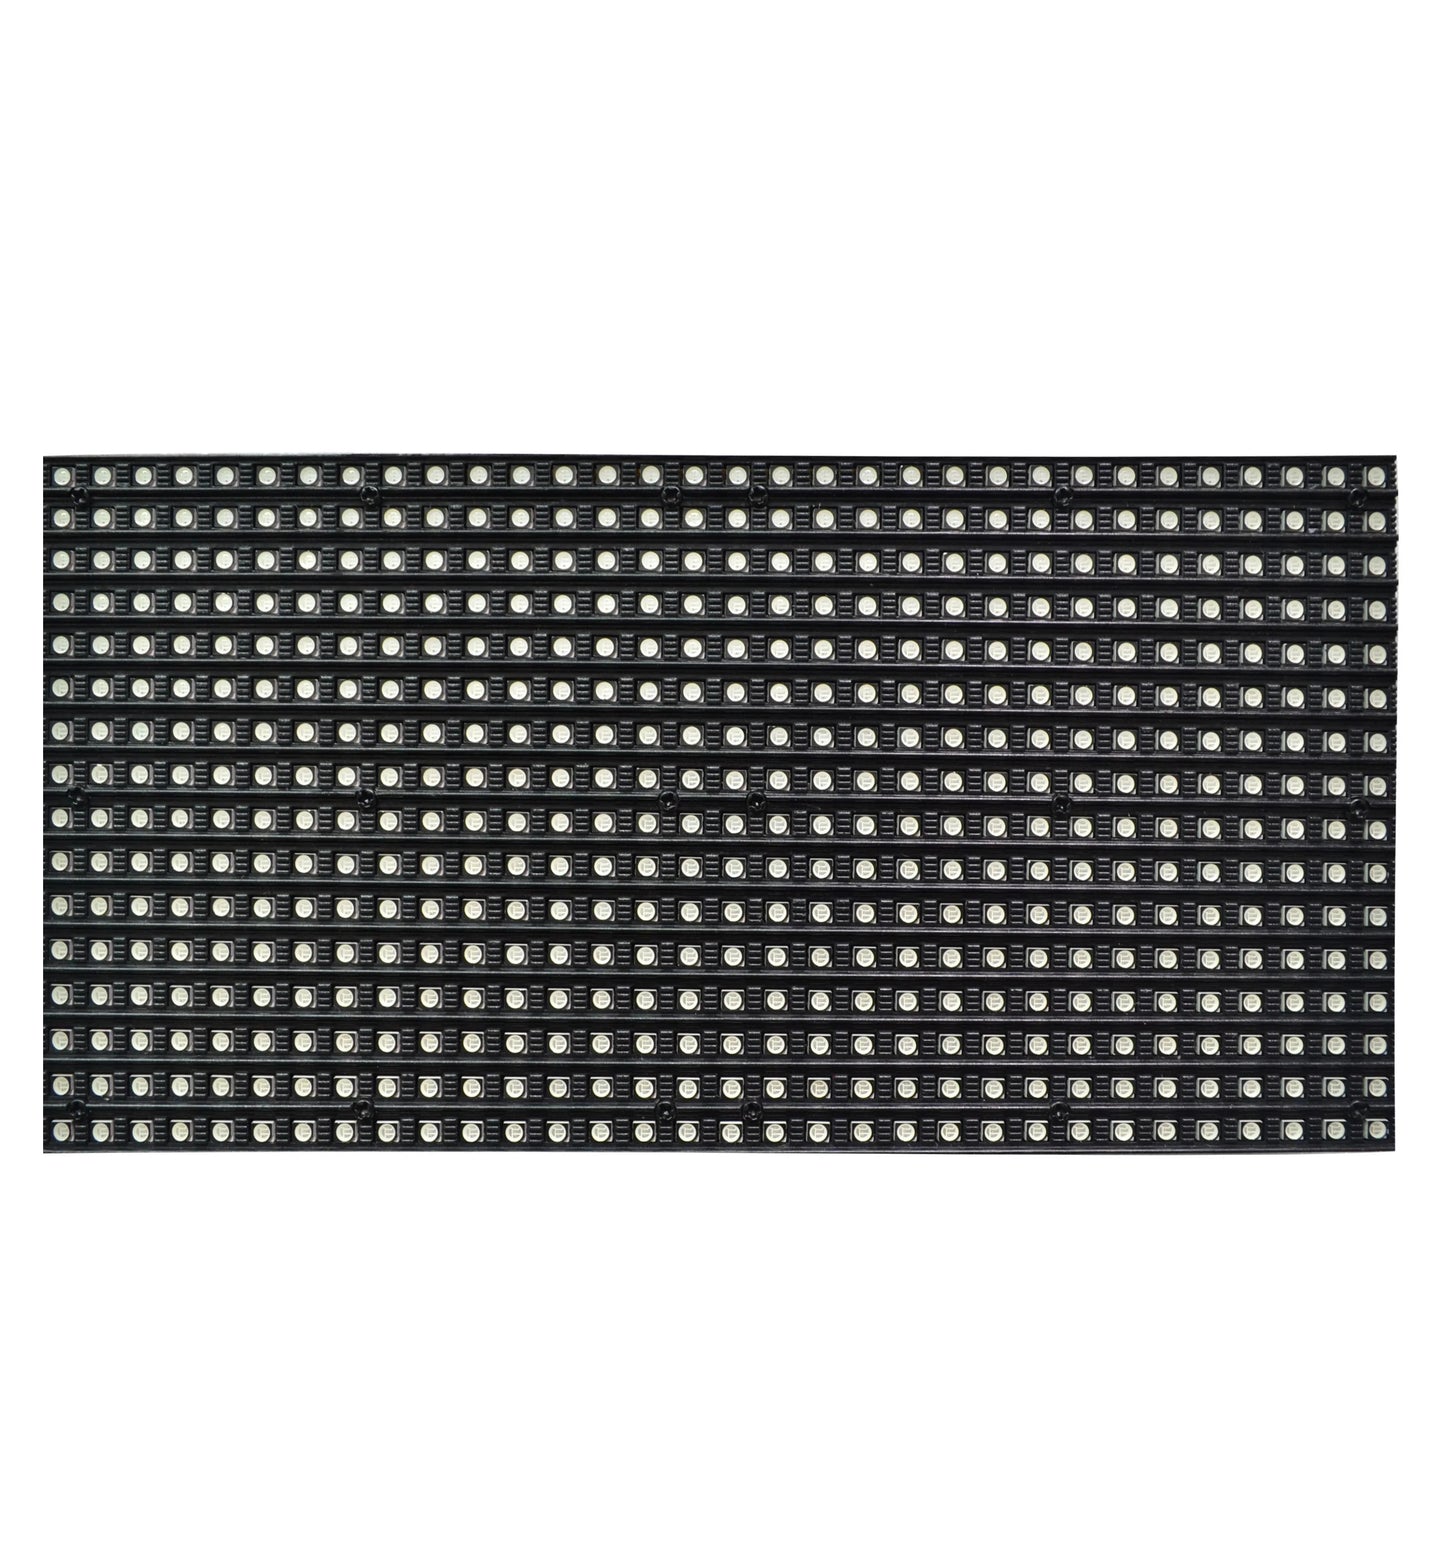 P6 Medium size 16x32 RGB LED matrix panel - 6mm Pitch- FREE SHIPPING